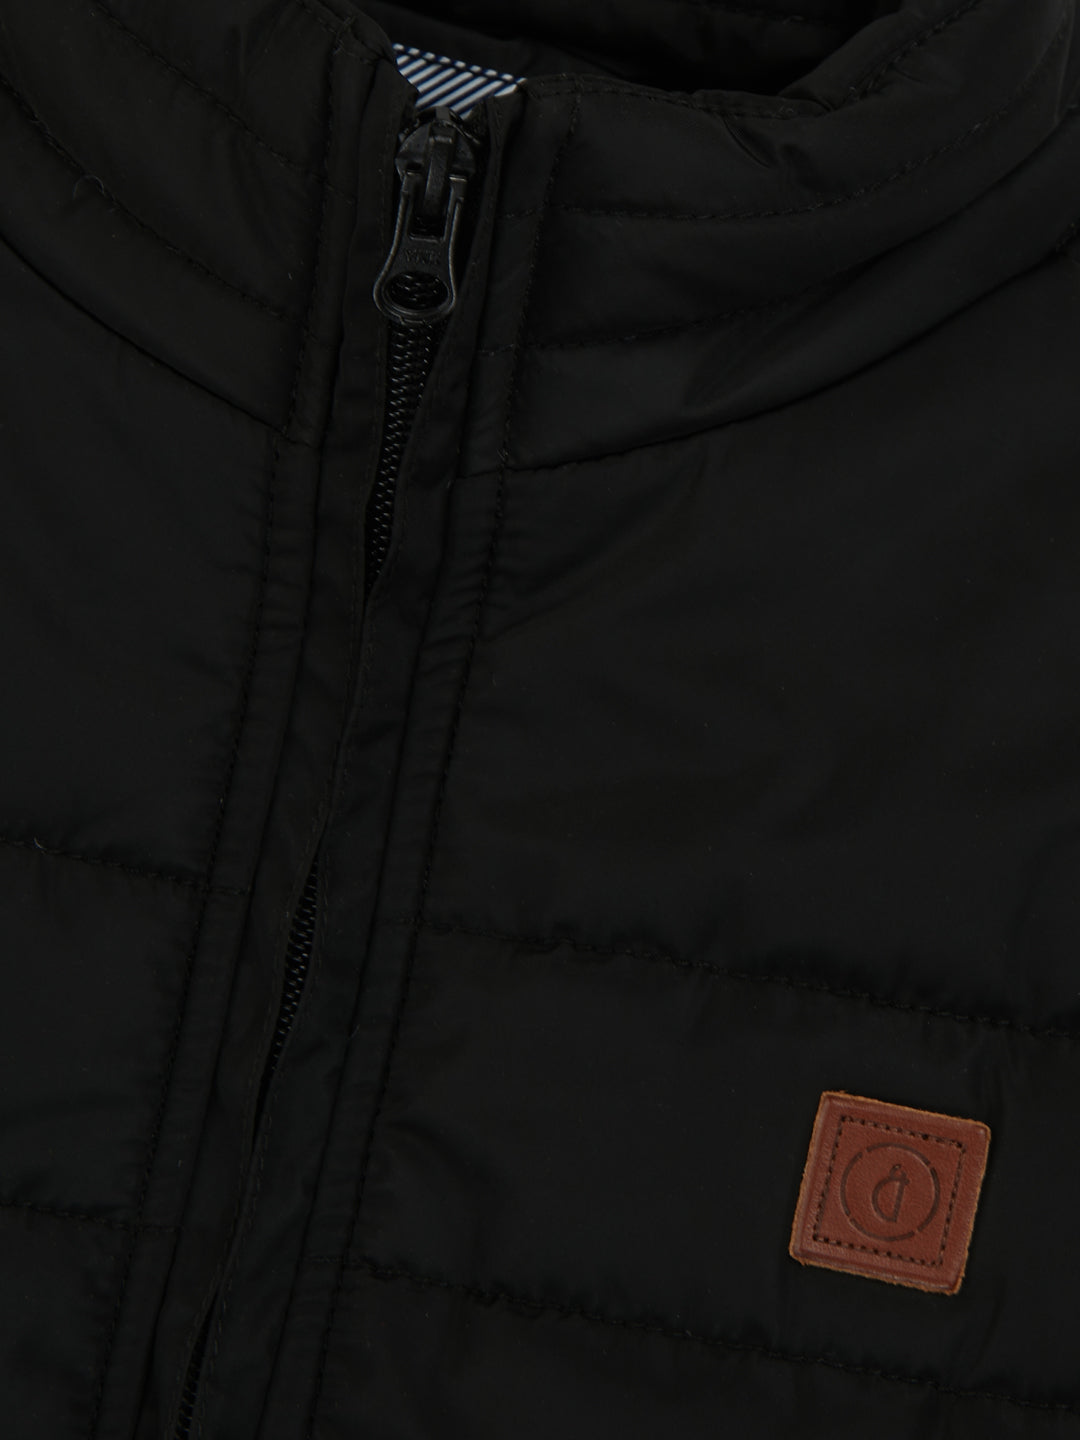 Boys Black Solid Polyester Heavy Winter Jacket